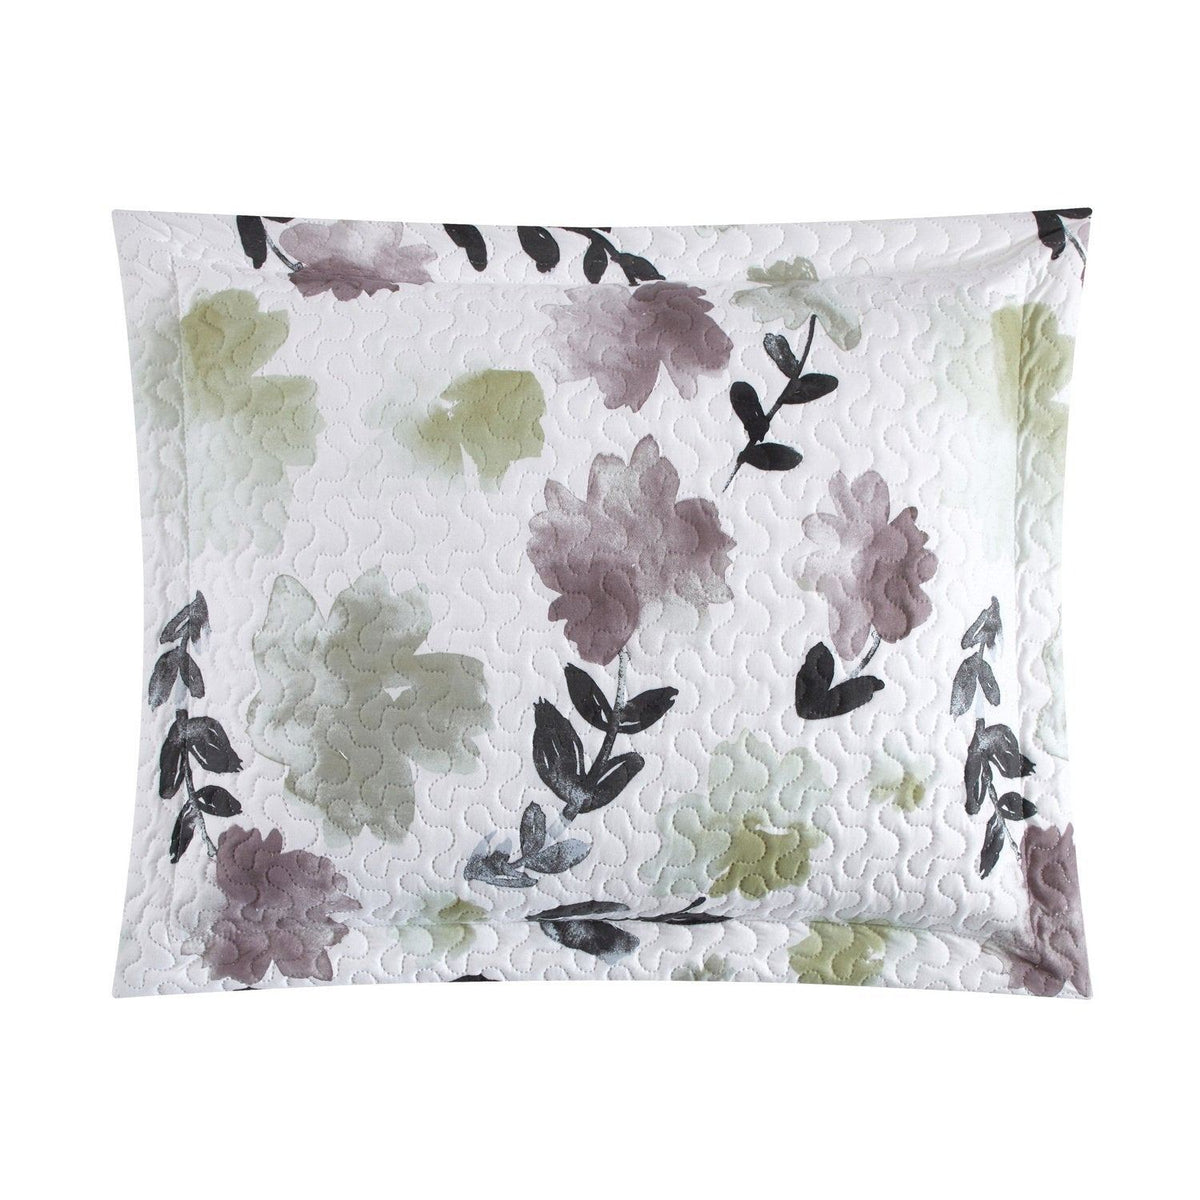 Chic Home Parson Green 3 Piece Reversible Watercolor Floral Print Quilt Set 